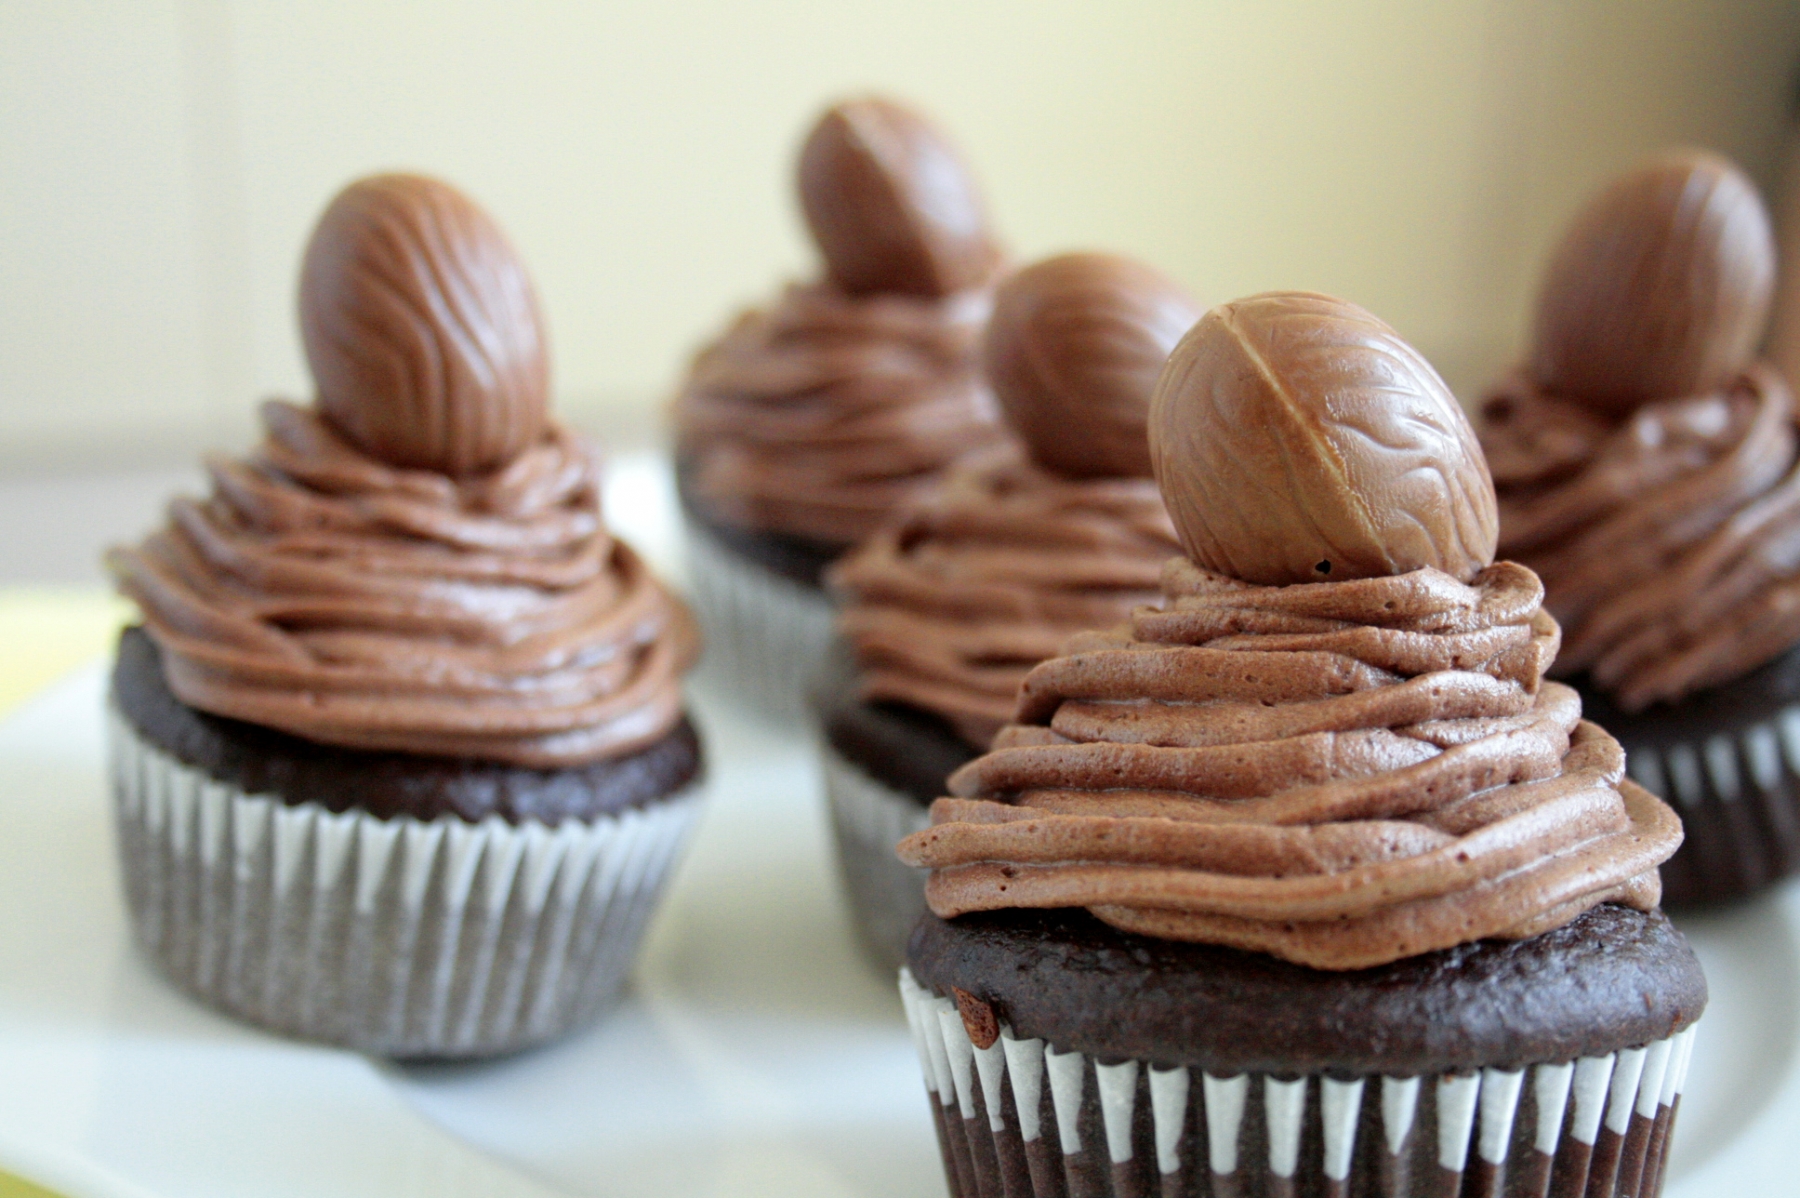 MG_5802-Easter-Chocolate-Cupcakes